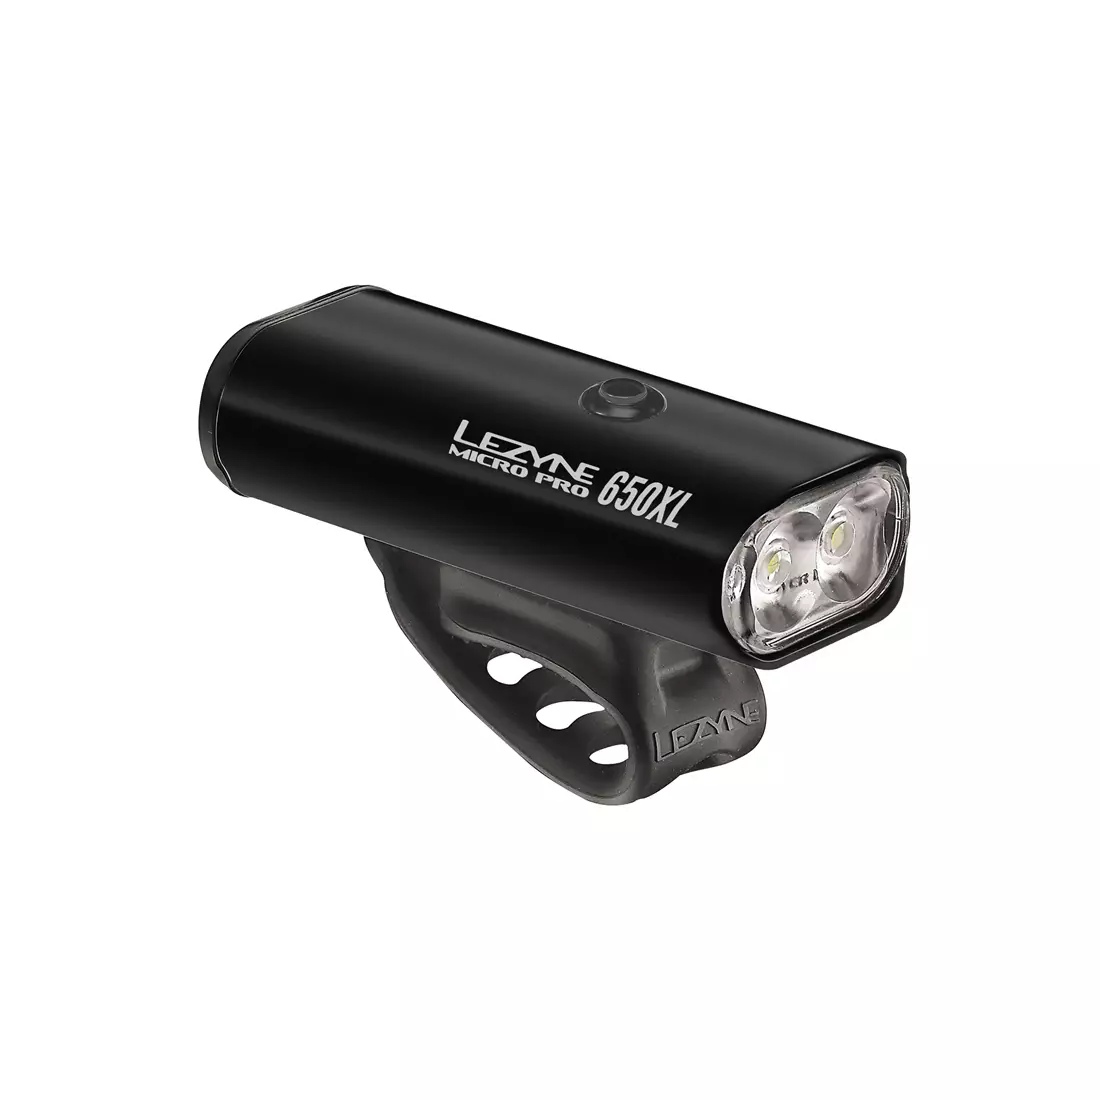 LEZYNE LED MICRO DRIVE PRO 650XL headlight 650 lumens, USB, black (NEW)